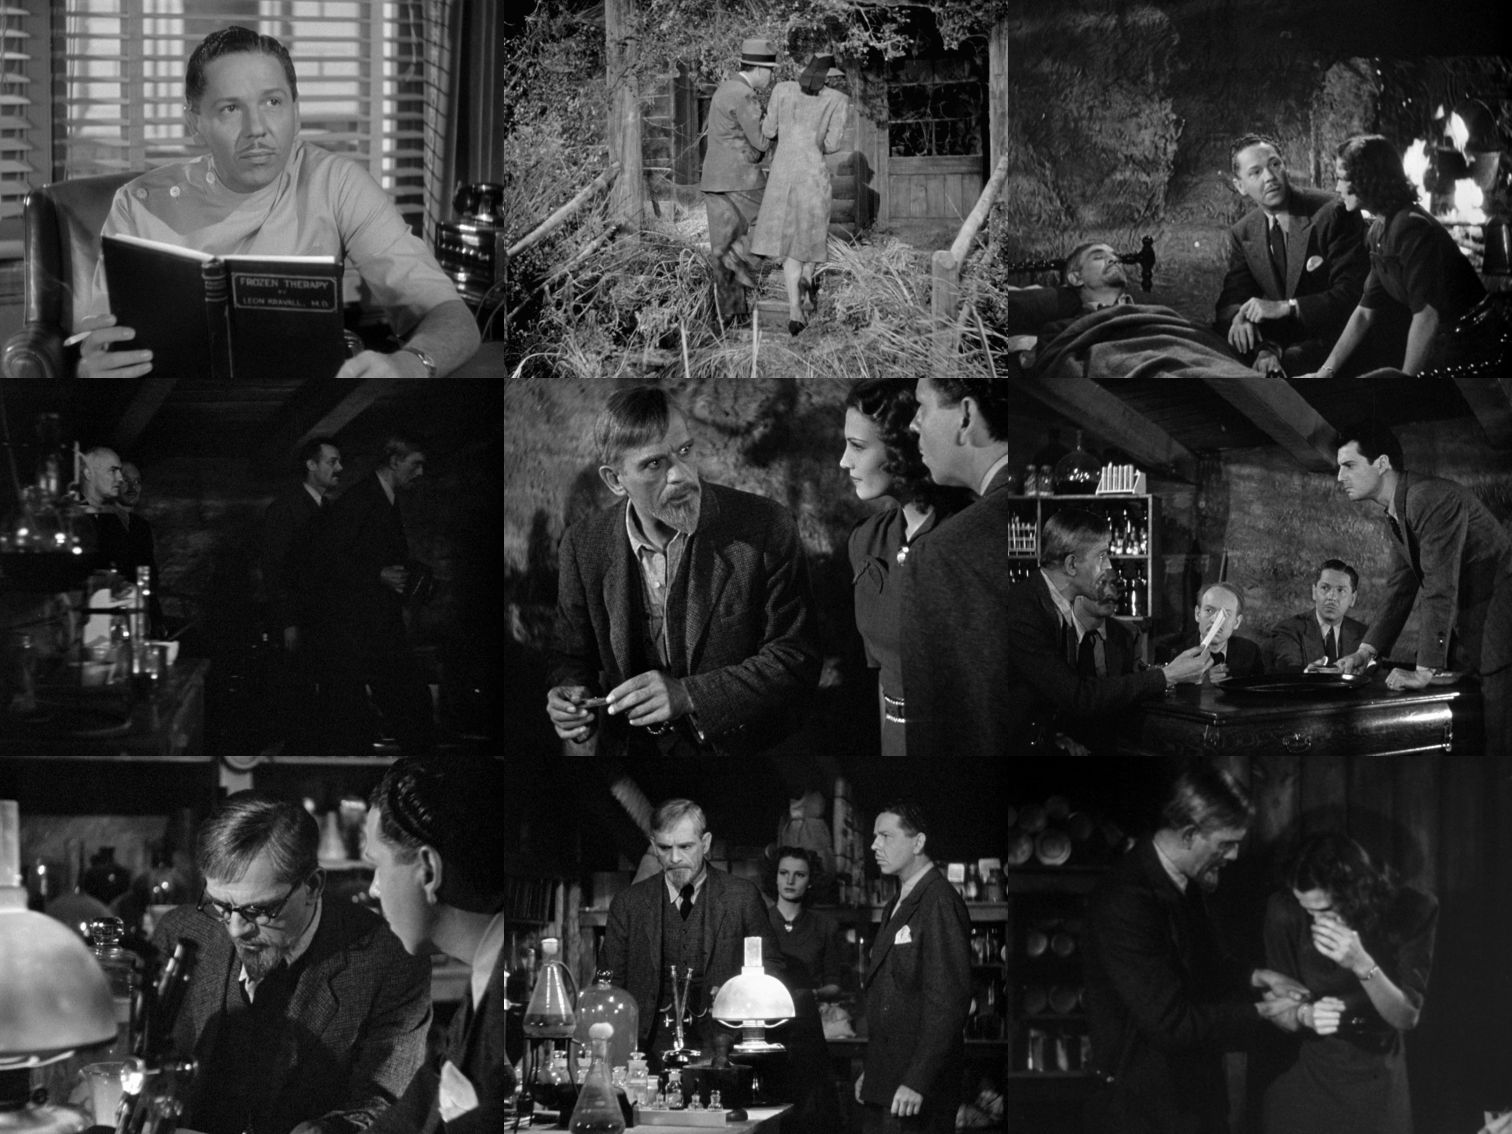 九命怪人 The.Man.with.Nine.Lives.1940.1080p.BluRay.x264-ORBS 7.30GB